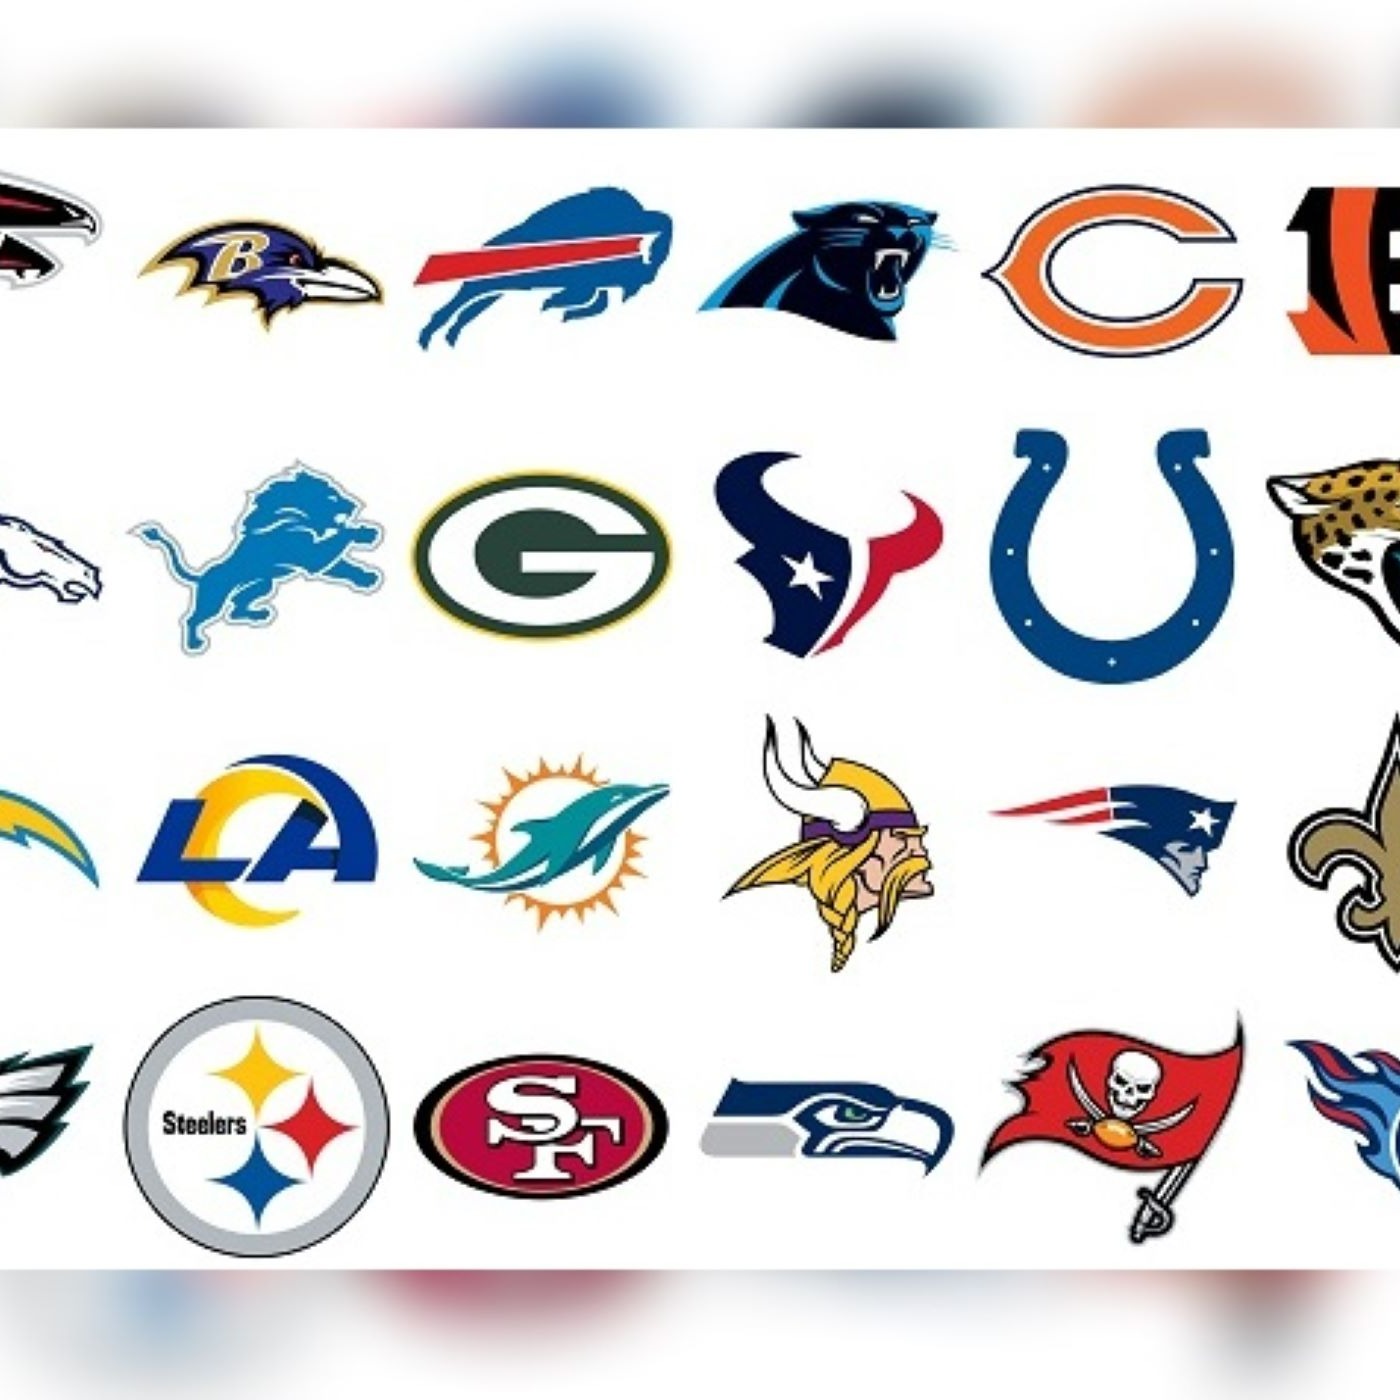 Chairshot NFL: Week 9 & Trade Deadline